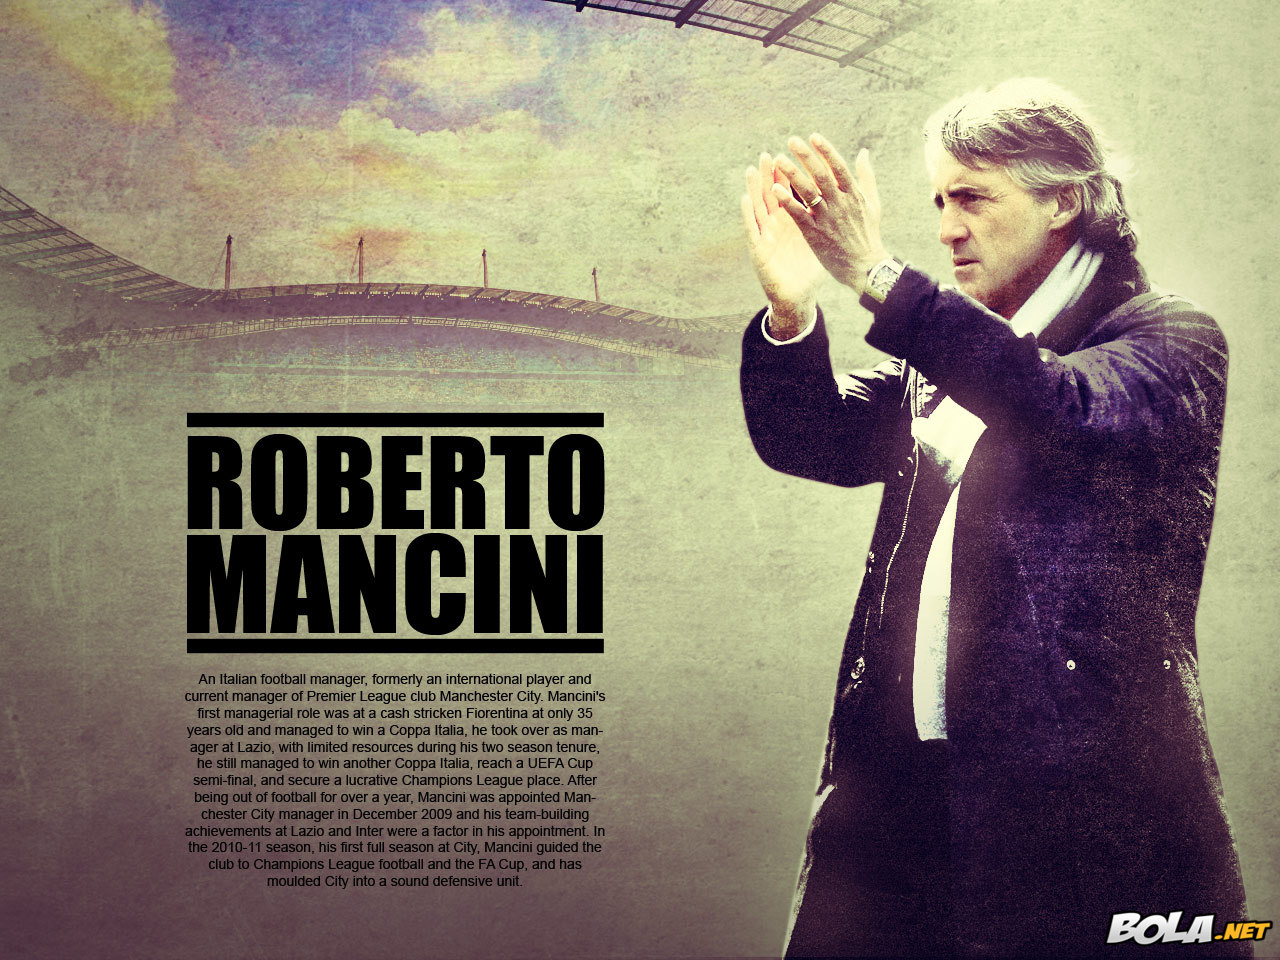 Deskripsi : Wallpaper Roberto Mancini, size: 1280x960